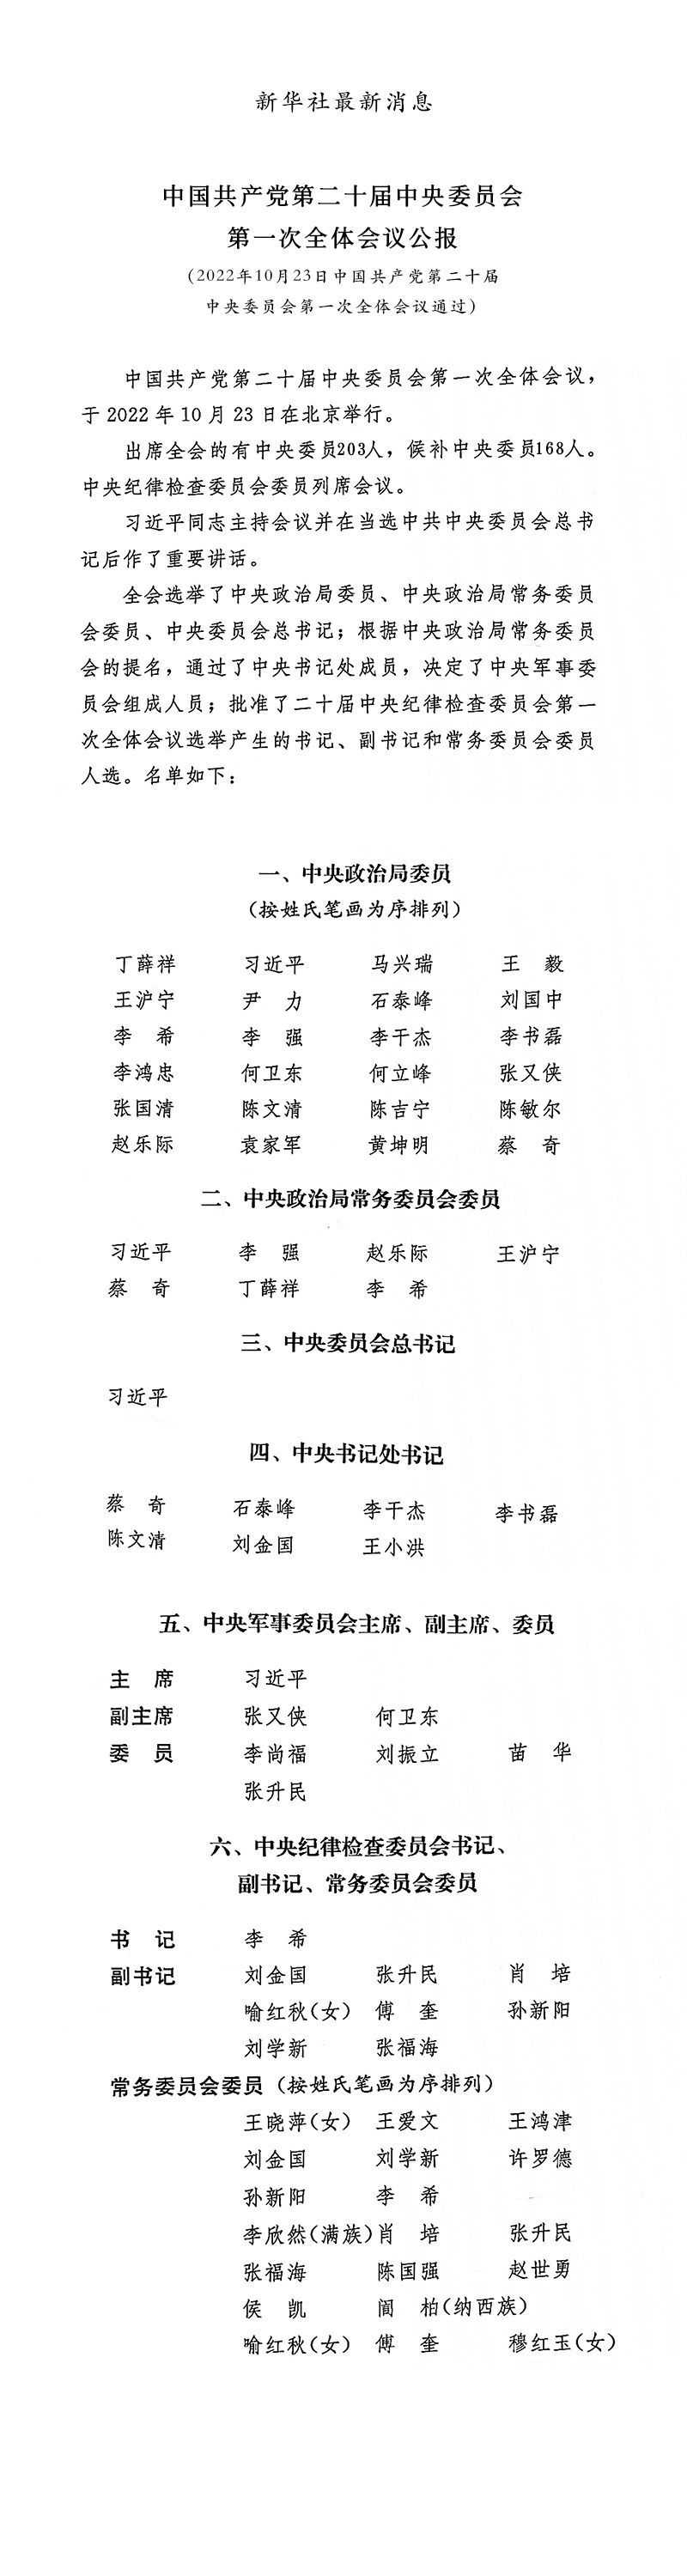 Re: [爆卦] 中國共產黨第廿屆中央政治局七常委名單